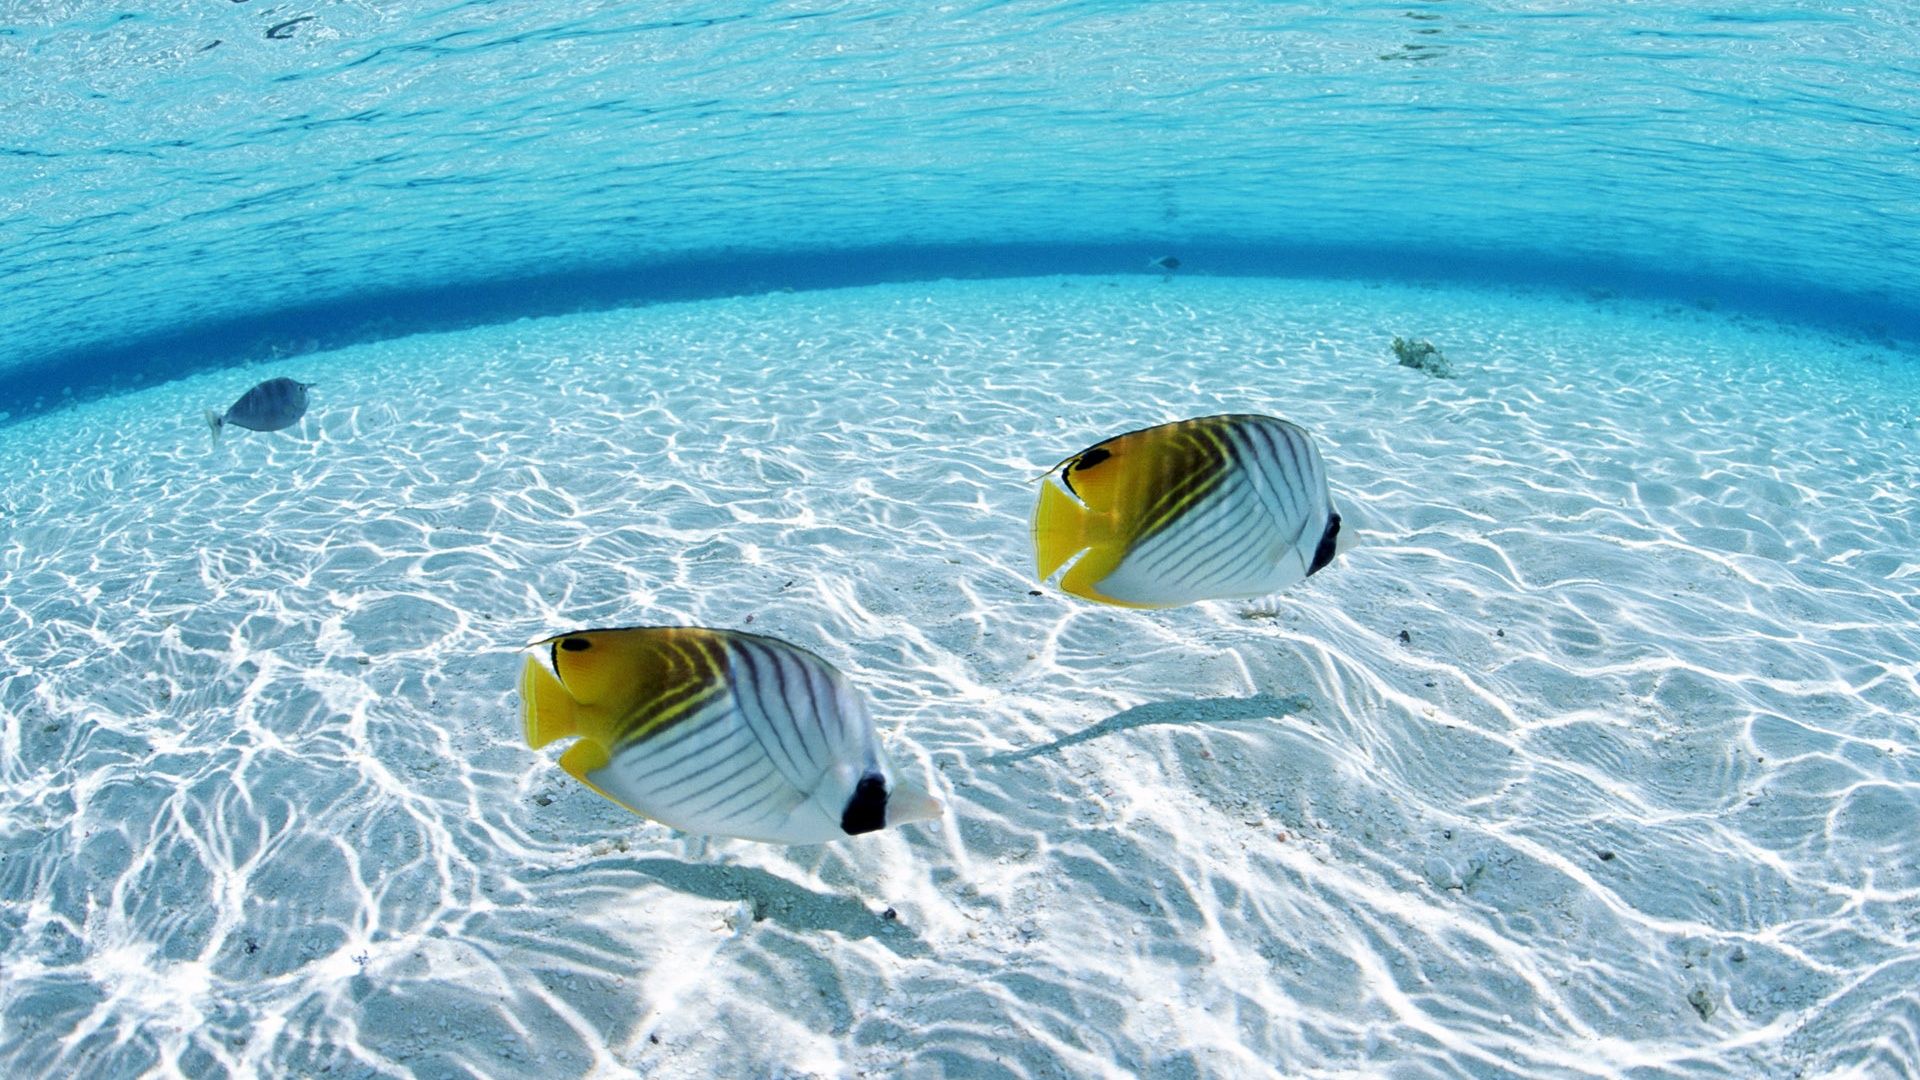 Wallpaper wallpapers animals search desktop tropical fish